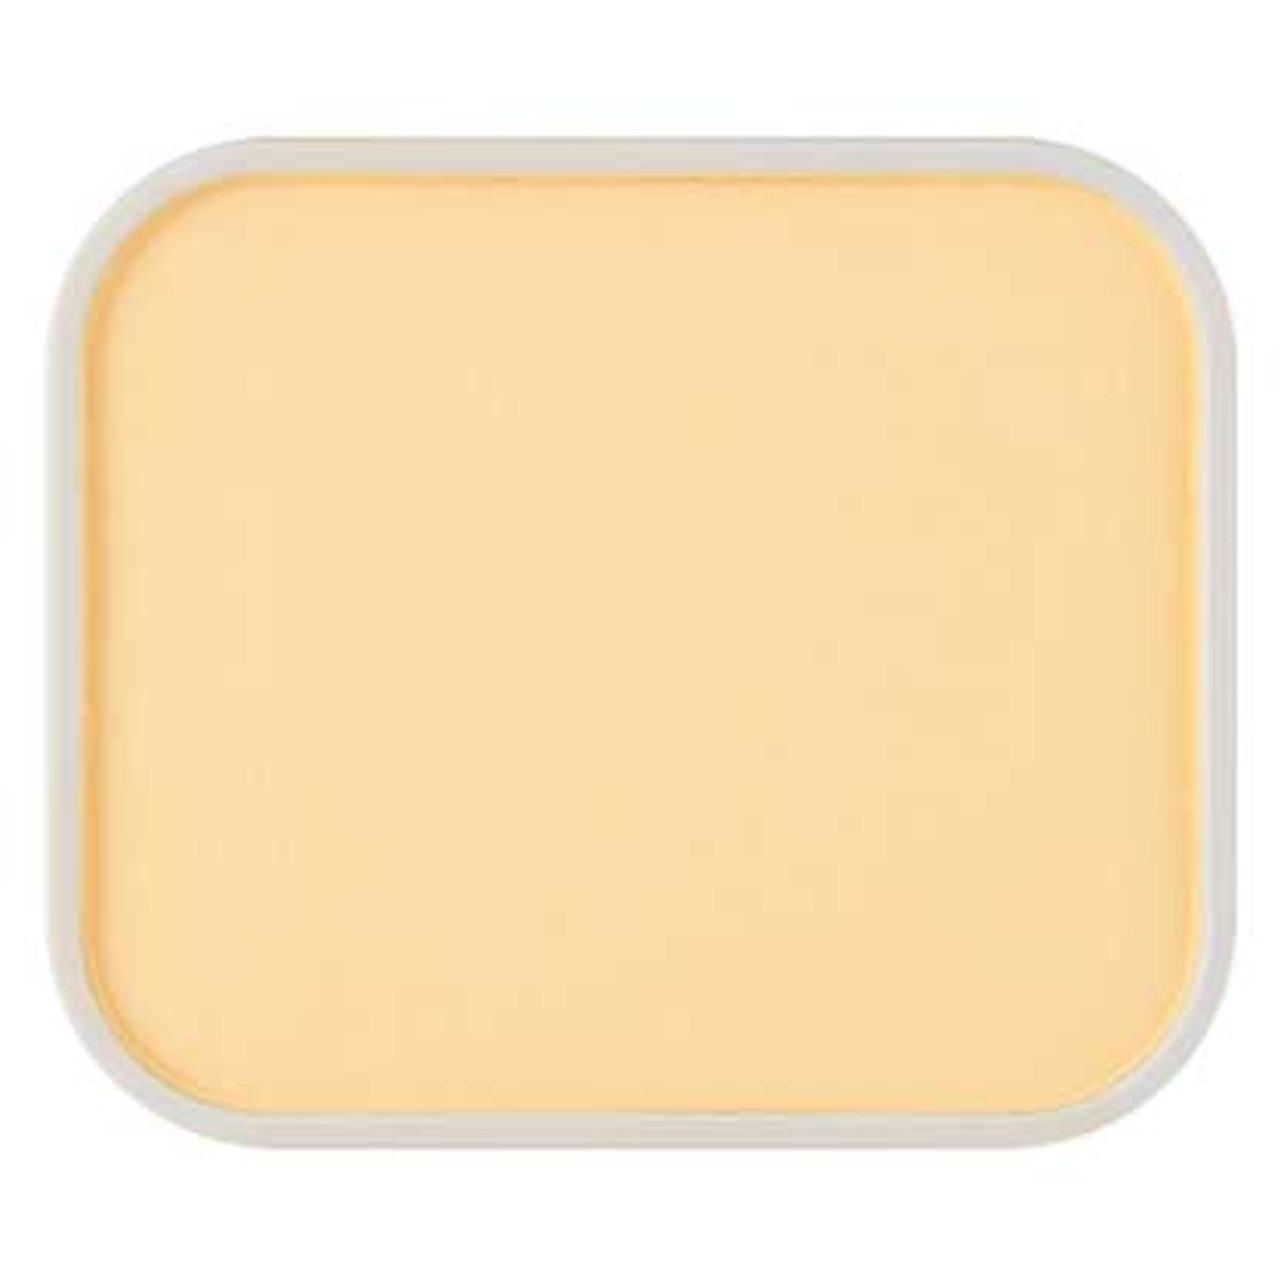 A rectanguar pan of yellow-beige powder foundation.